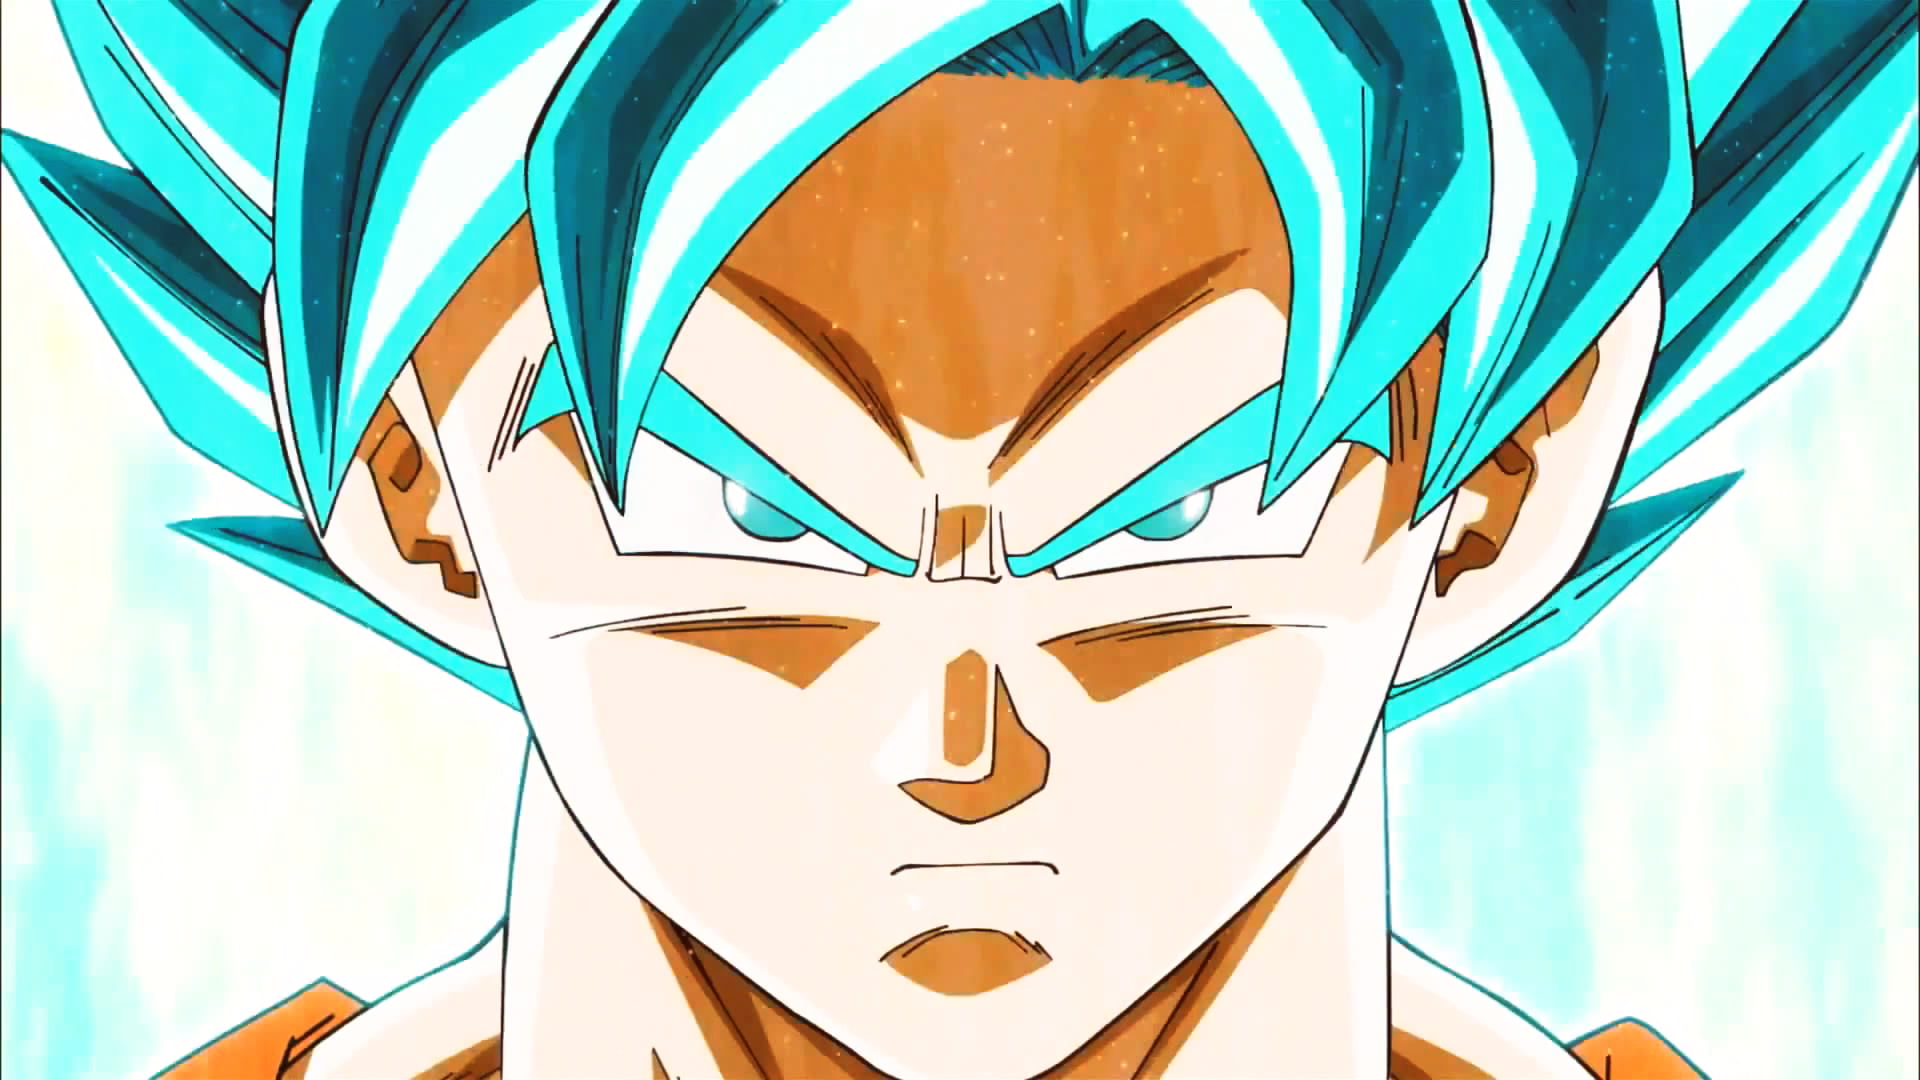 Cool Son Goku Super Saiyan Blue Wallpaper Hd images